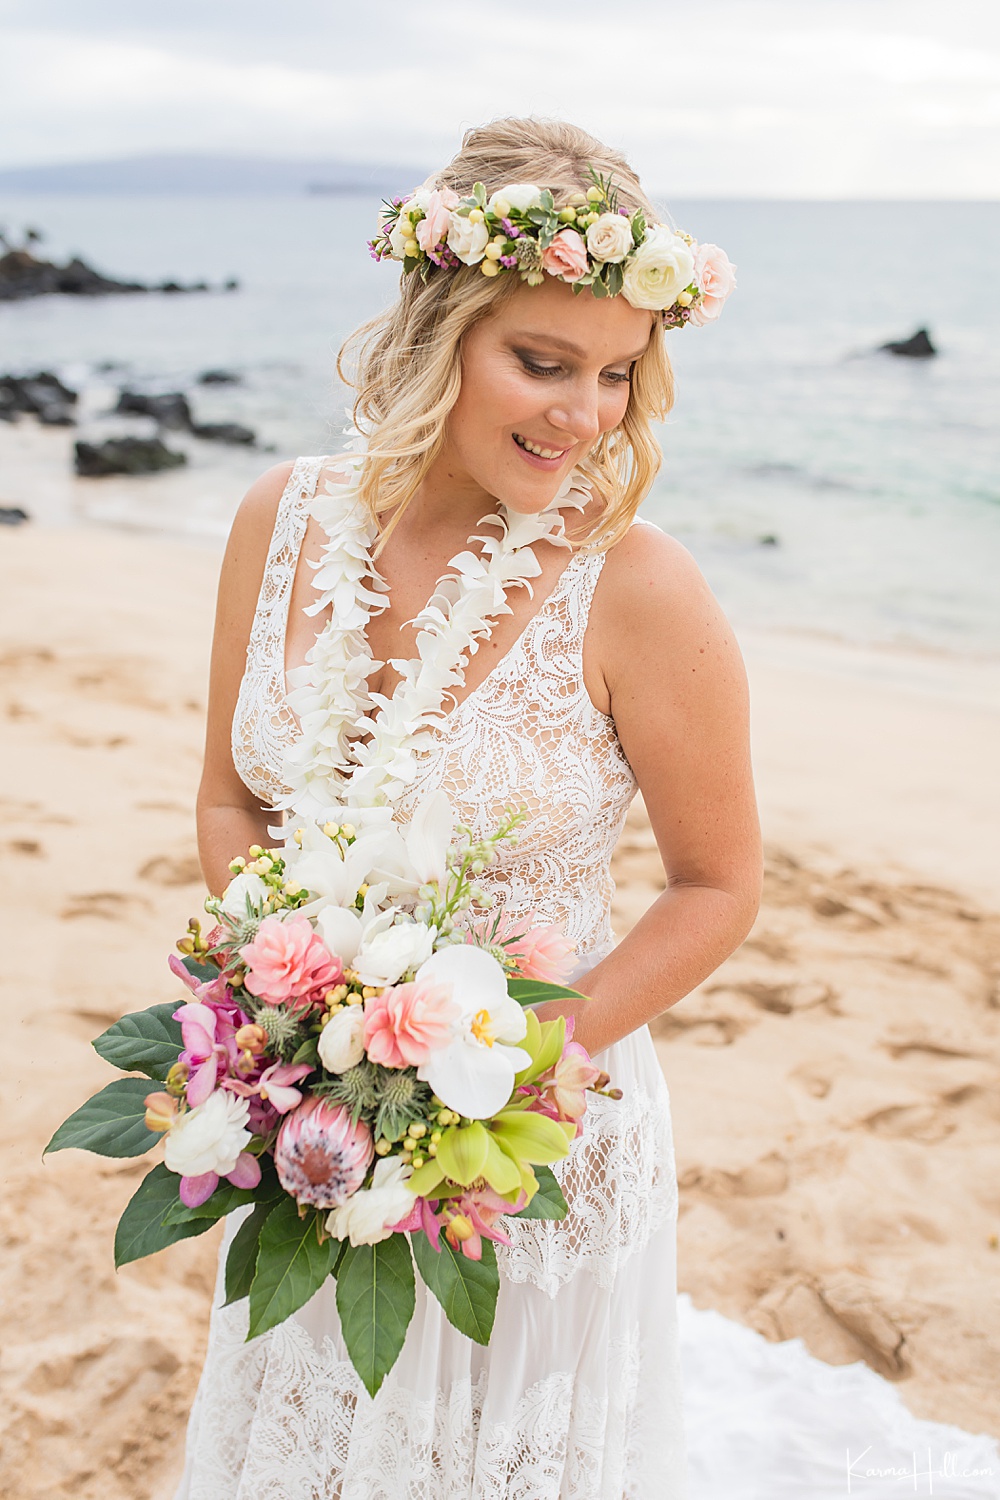 Getting Married in Paradise ~ Kristina & Albert's Hawaii Elopement